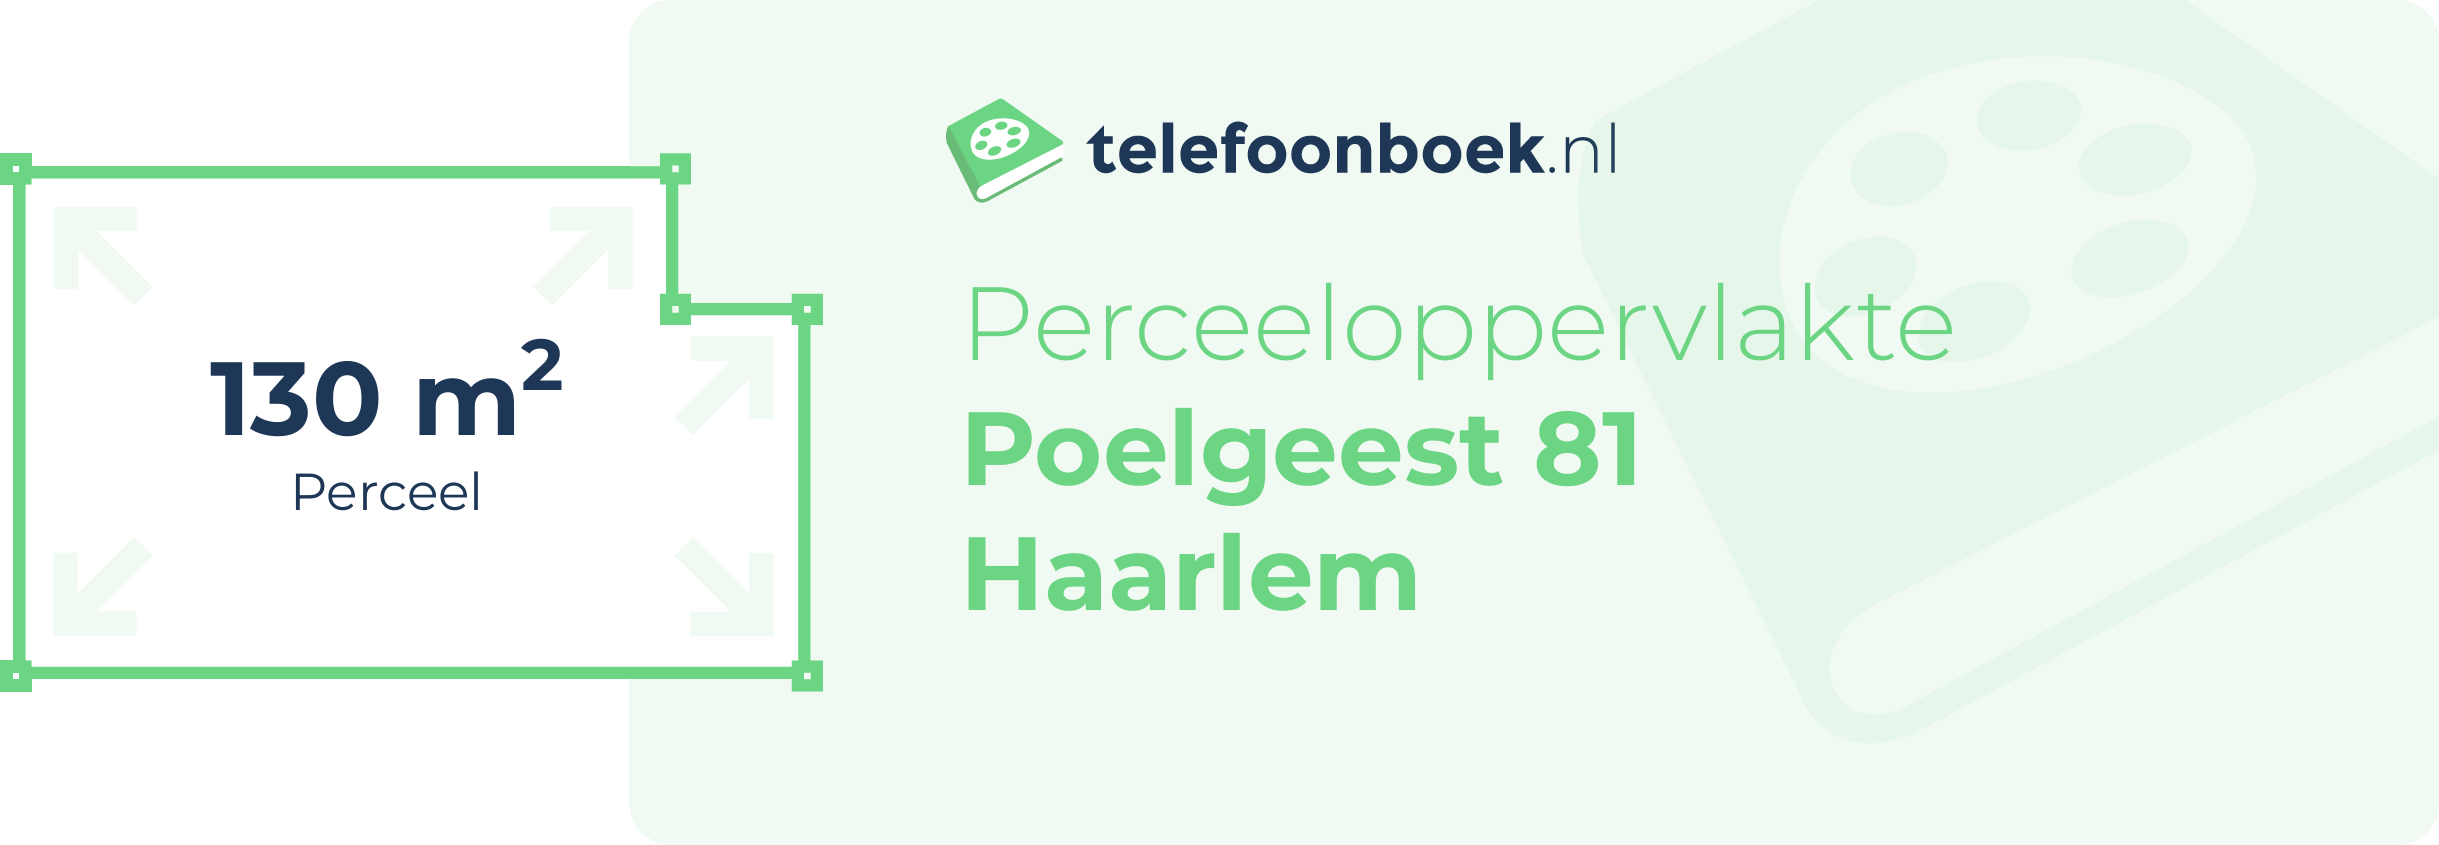 Perceeloppervlakte Poelgeest 81 Haarlem